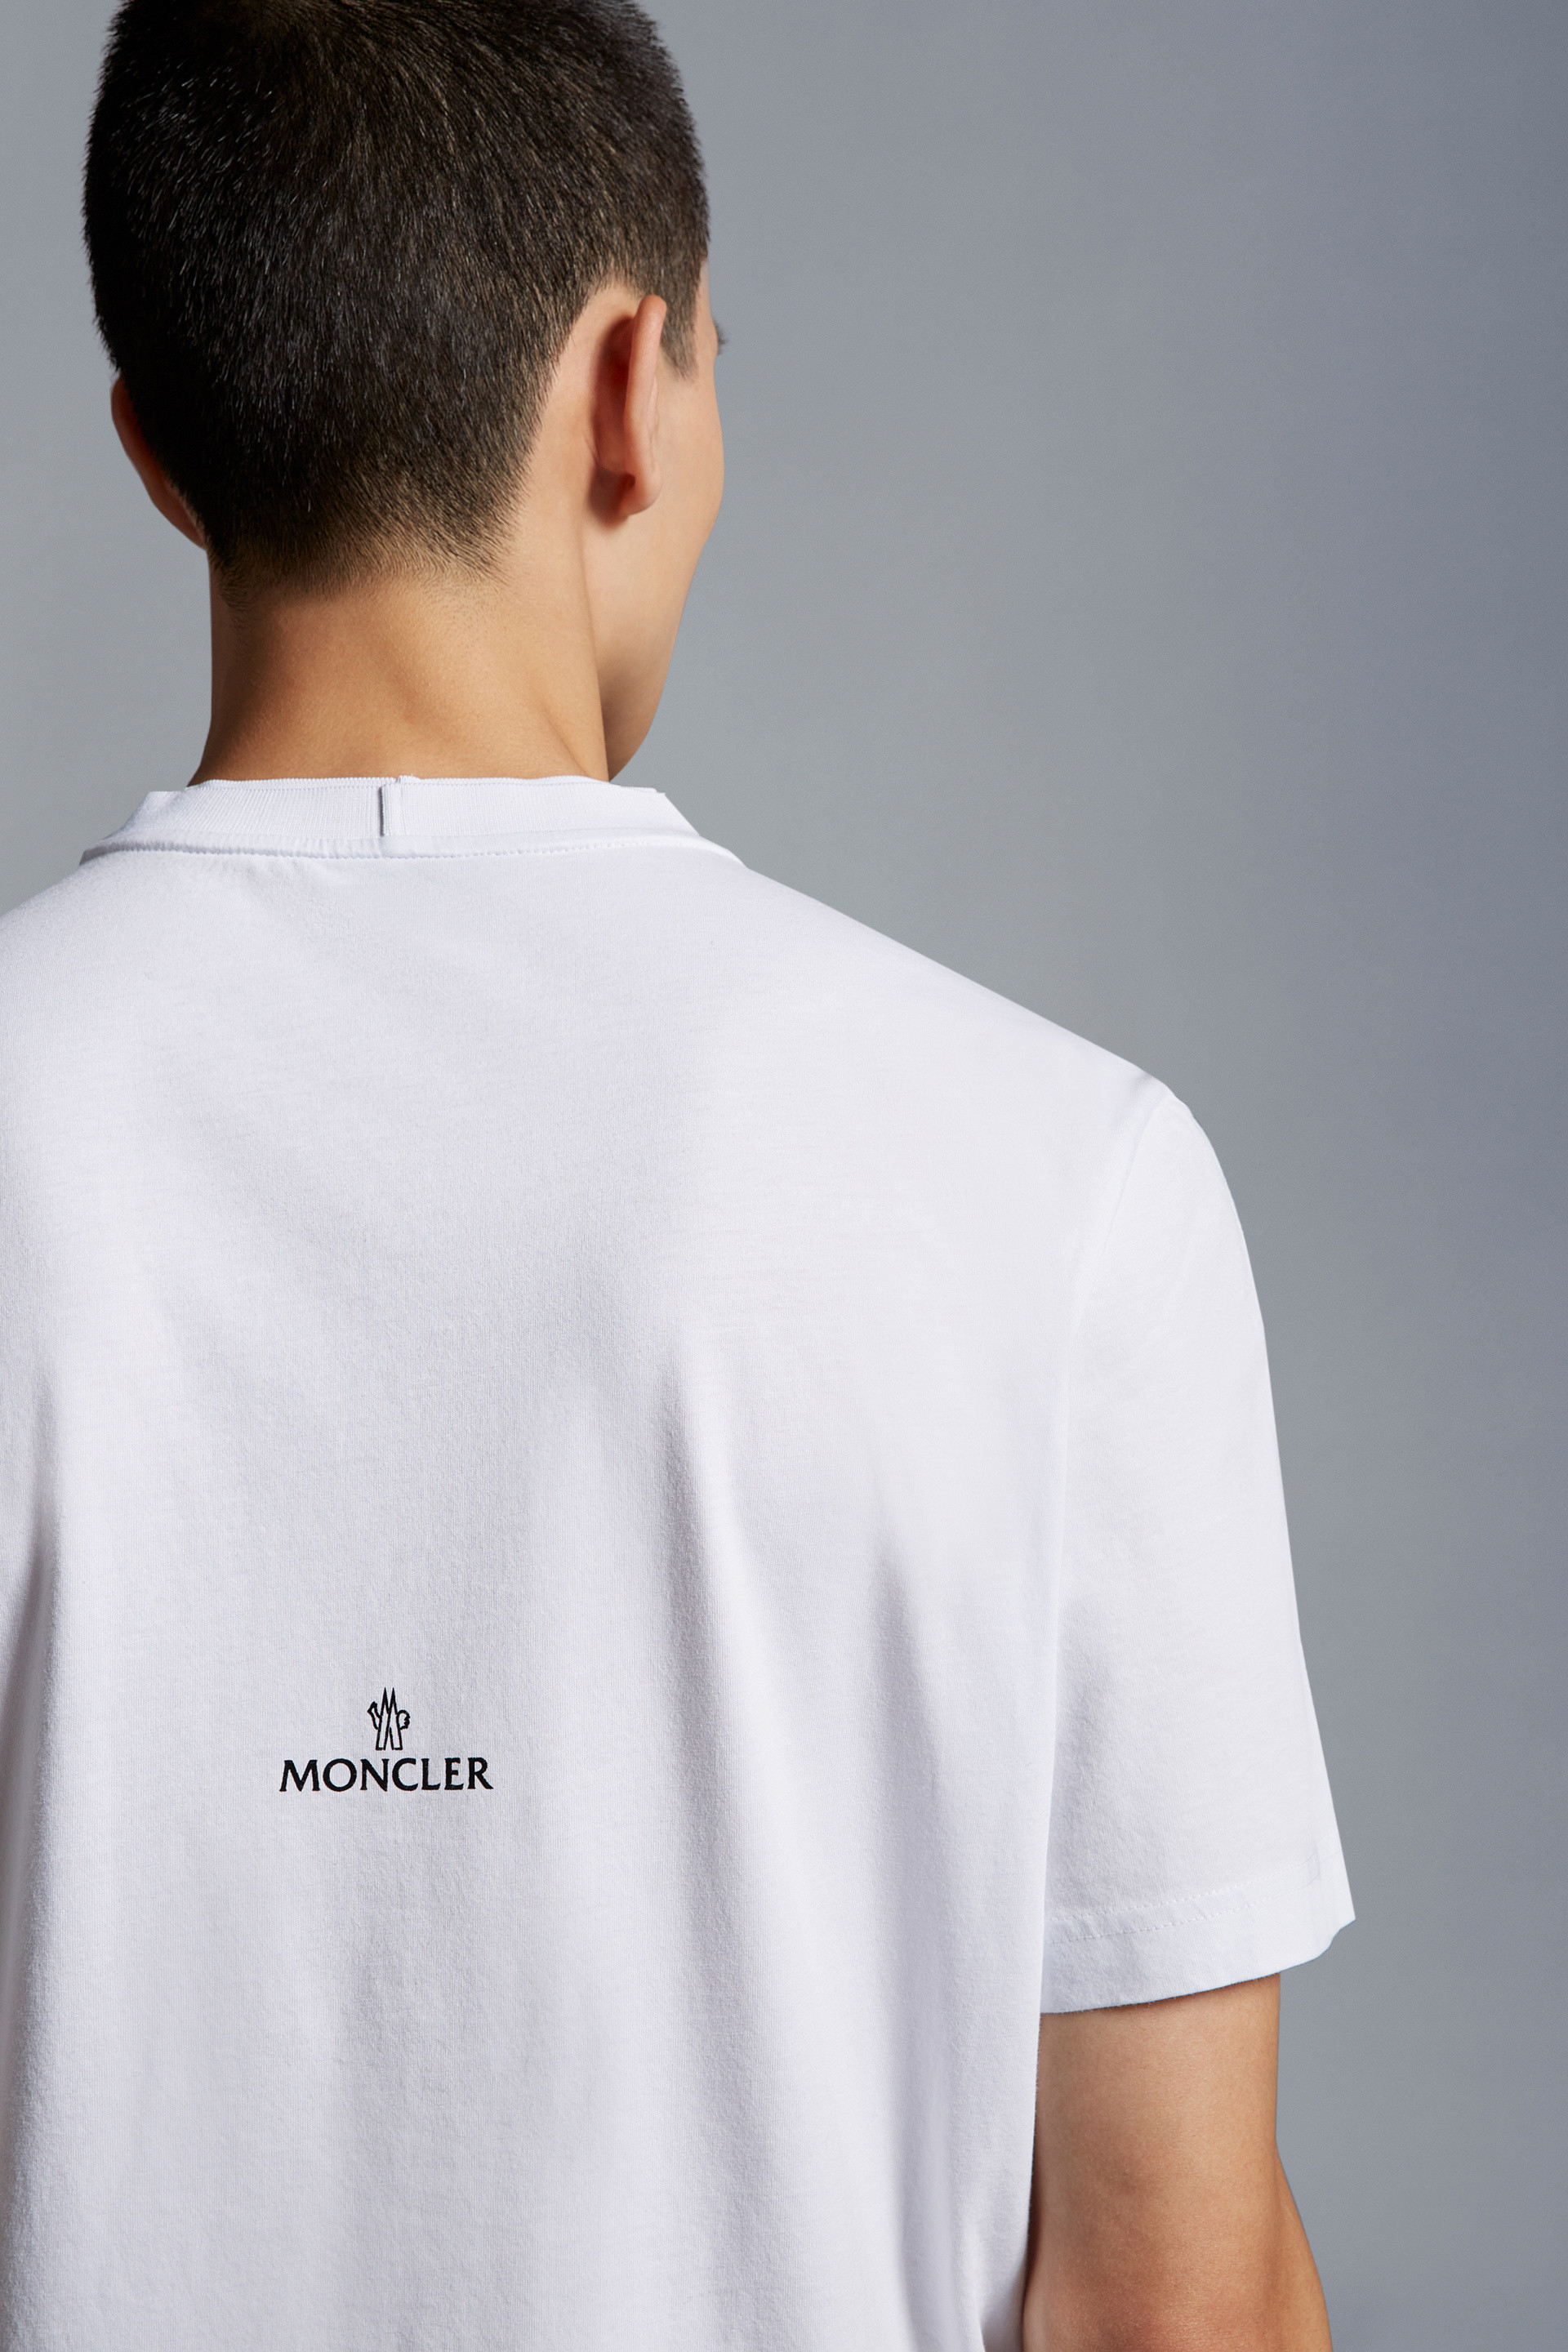 Moncler Men's Logo T-Shirt